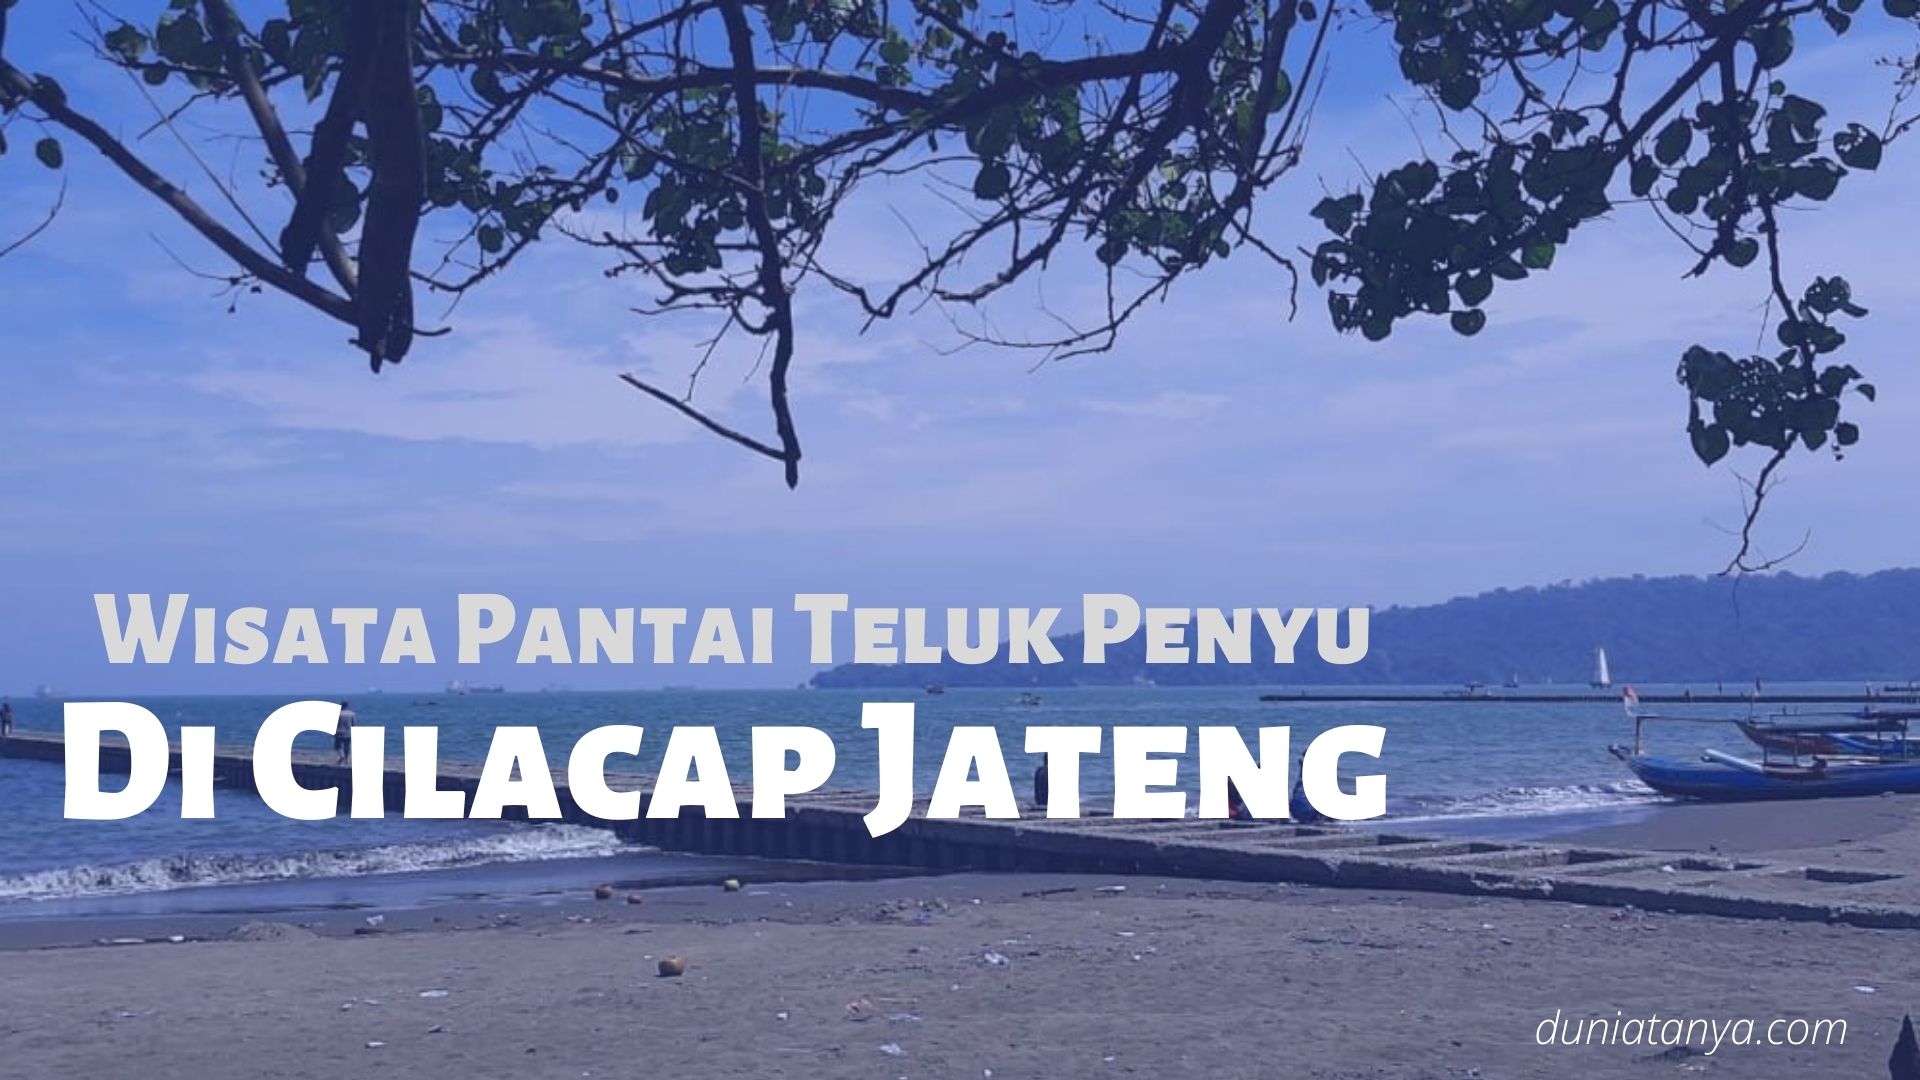 You are currently viewing Wisata Pantai Teluk Penyu Di Cilacap Jateng